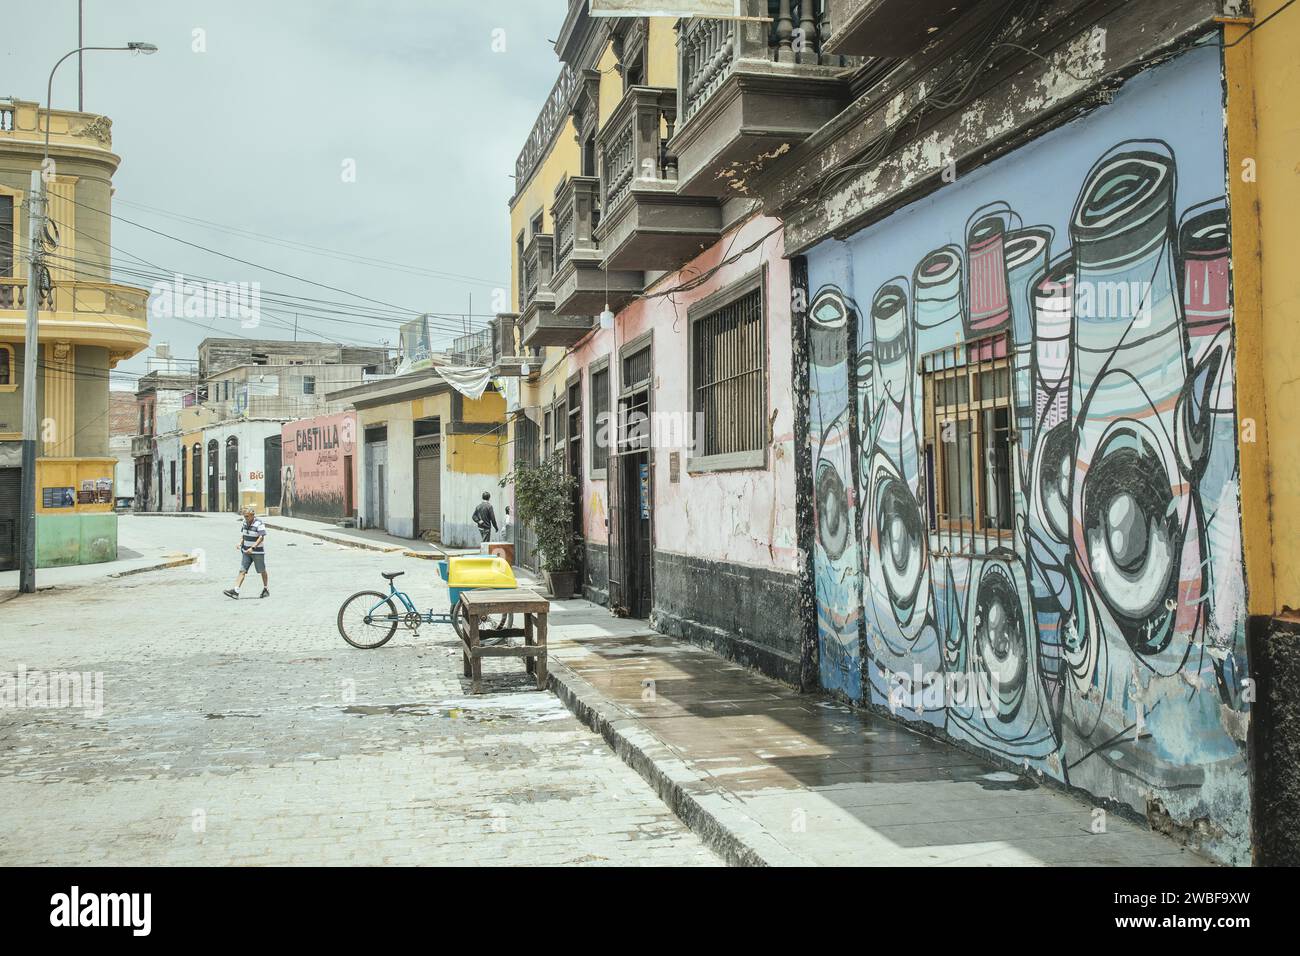 Old town alley, Callao, Peru Stock Photo